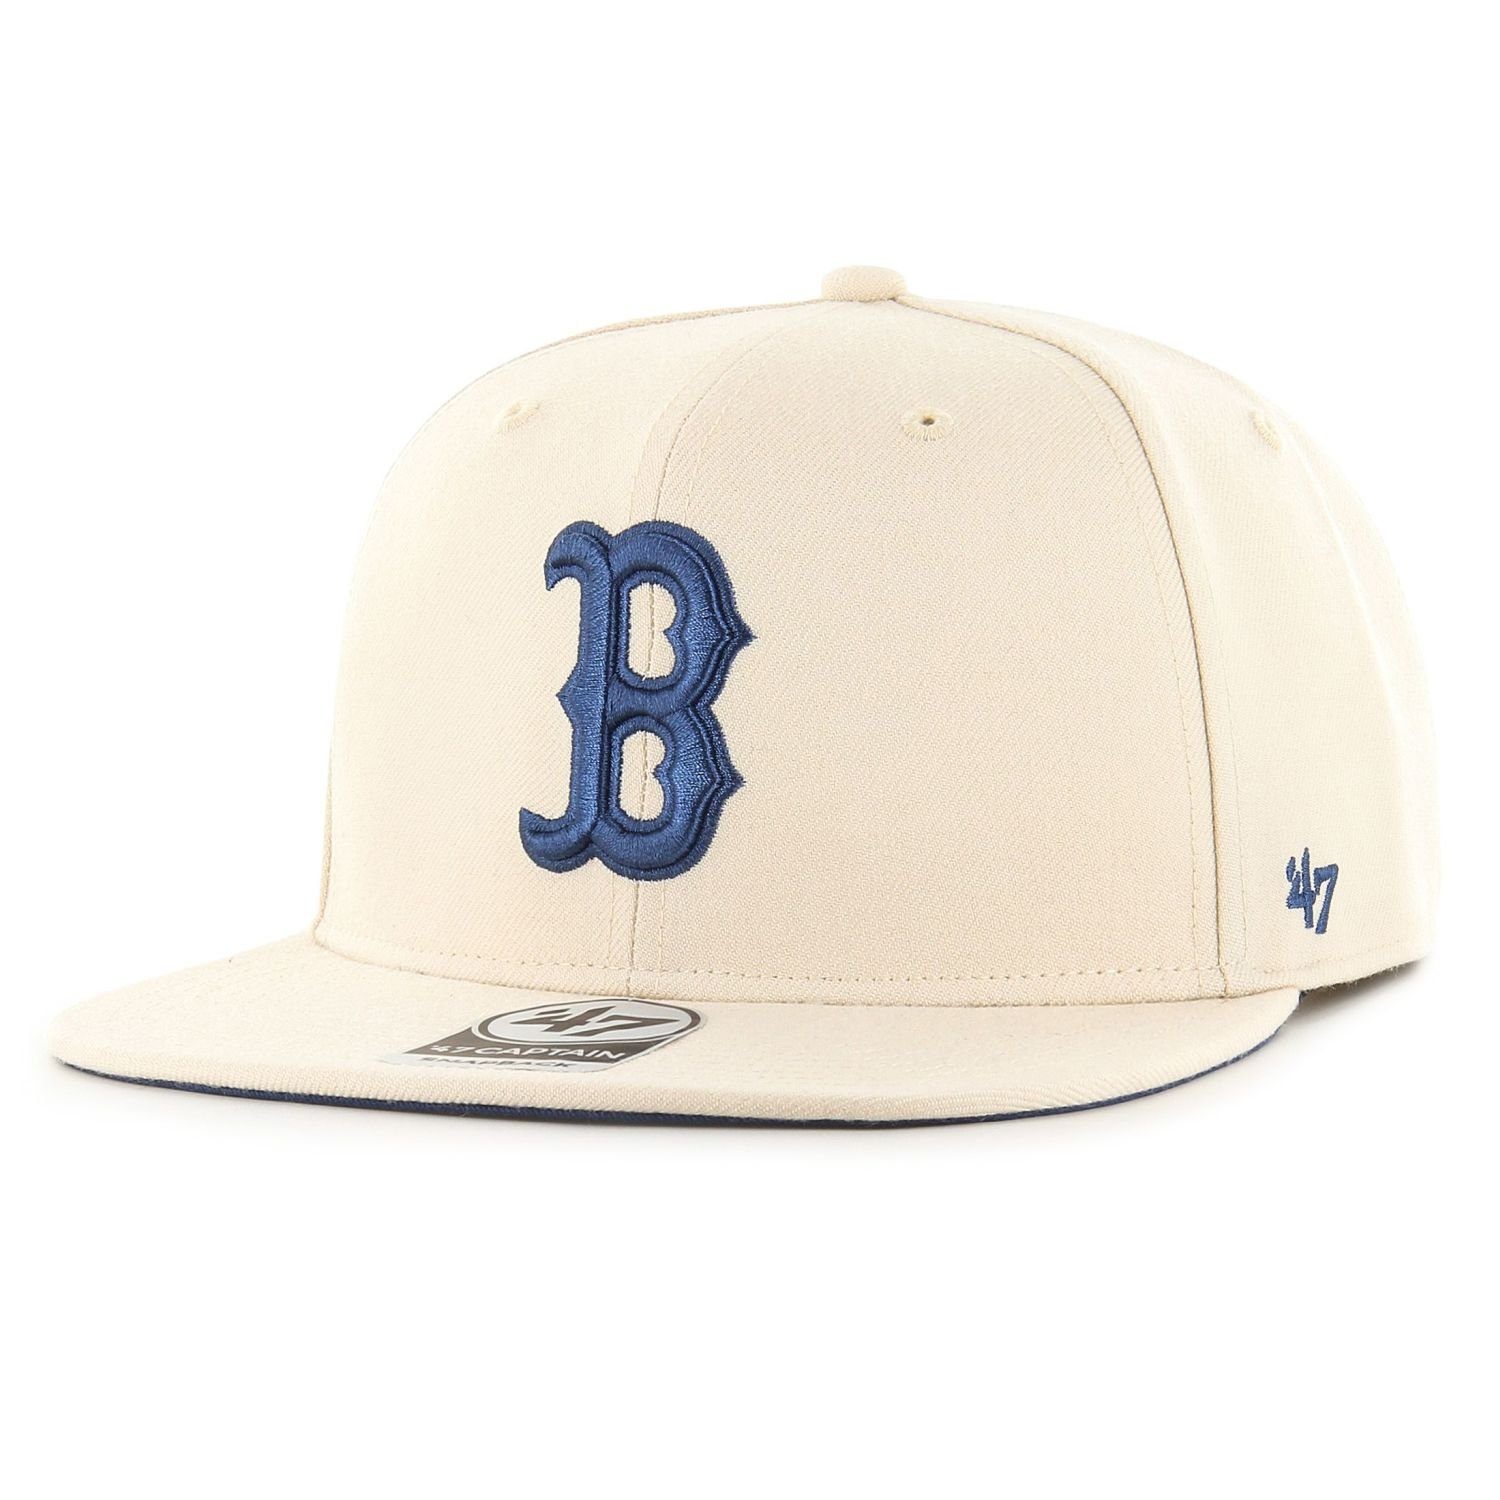 '47 Brand Snapback Cap CAPTAIN Boston Red Sox